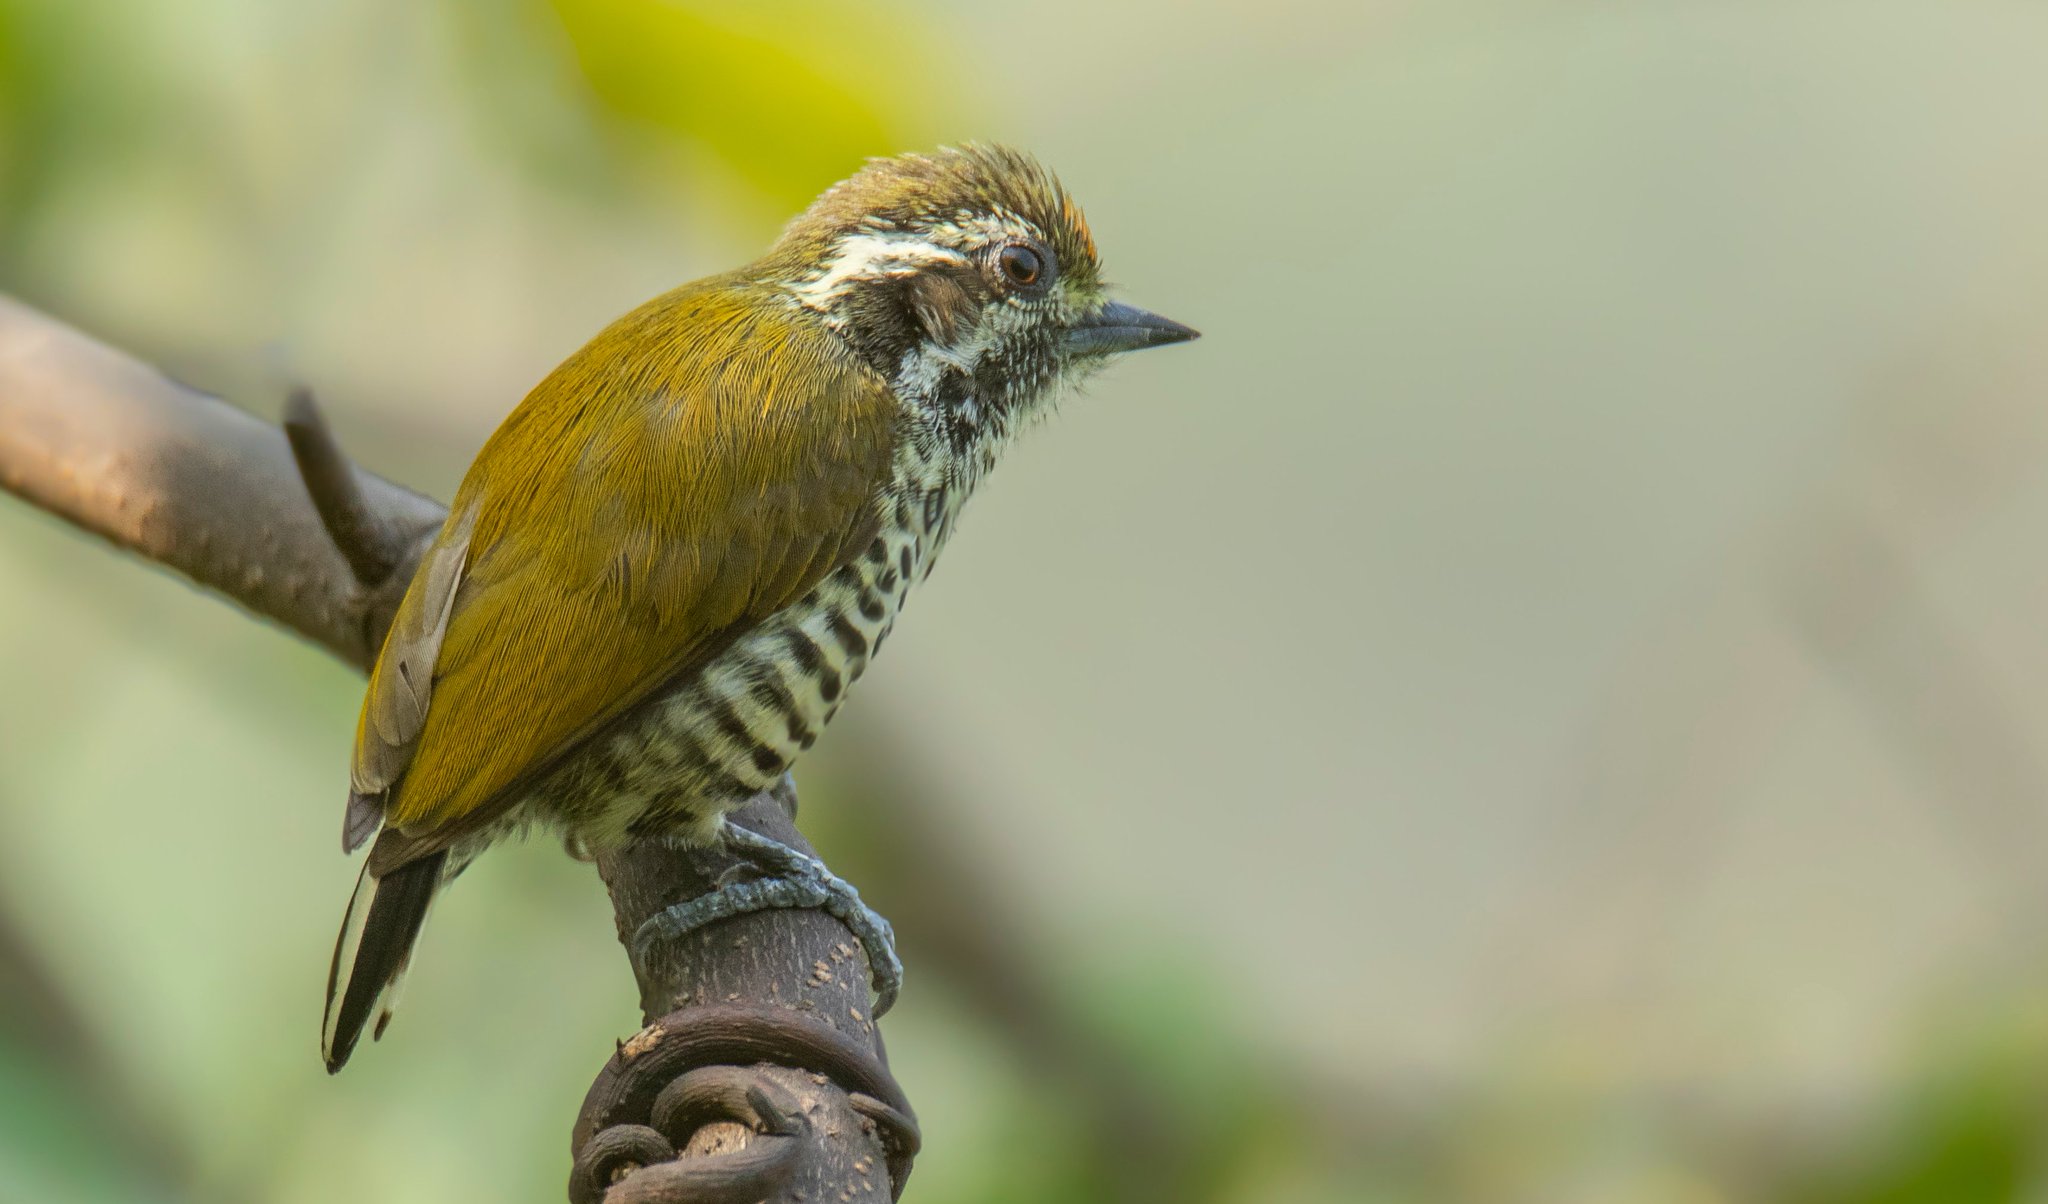 Bhutan Bird Finder (Birding in Bhutan) on X: "Speckled Piculet (Picumnus innominatus) in the subtropical forest, Bhutan. #TwitterNatureCommunity #birdwatching #birdconservation #avitourism #ornithology #birdphotography #birds https://t.co/jiFR0AxAMp" / X